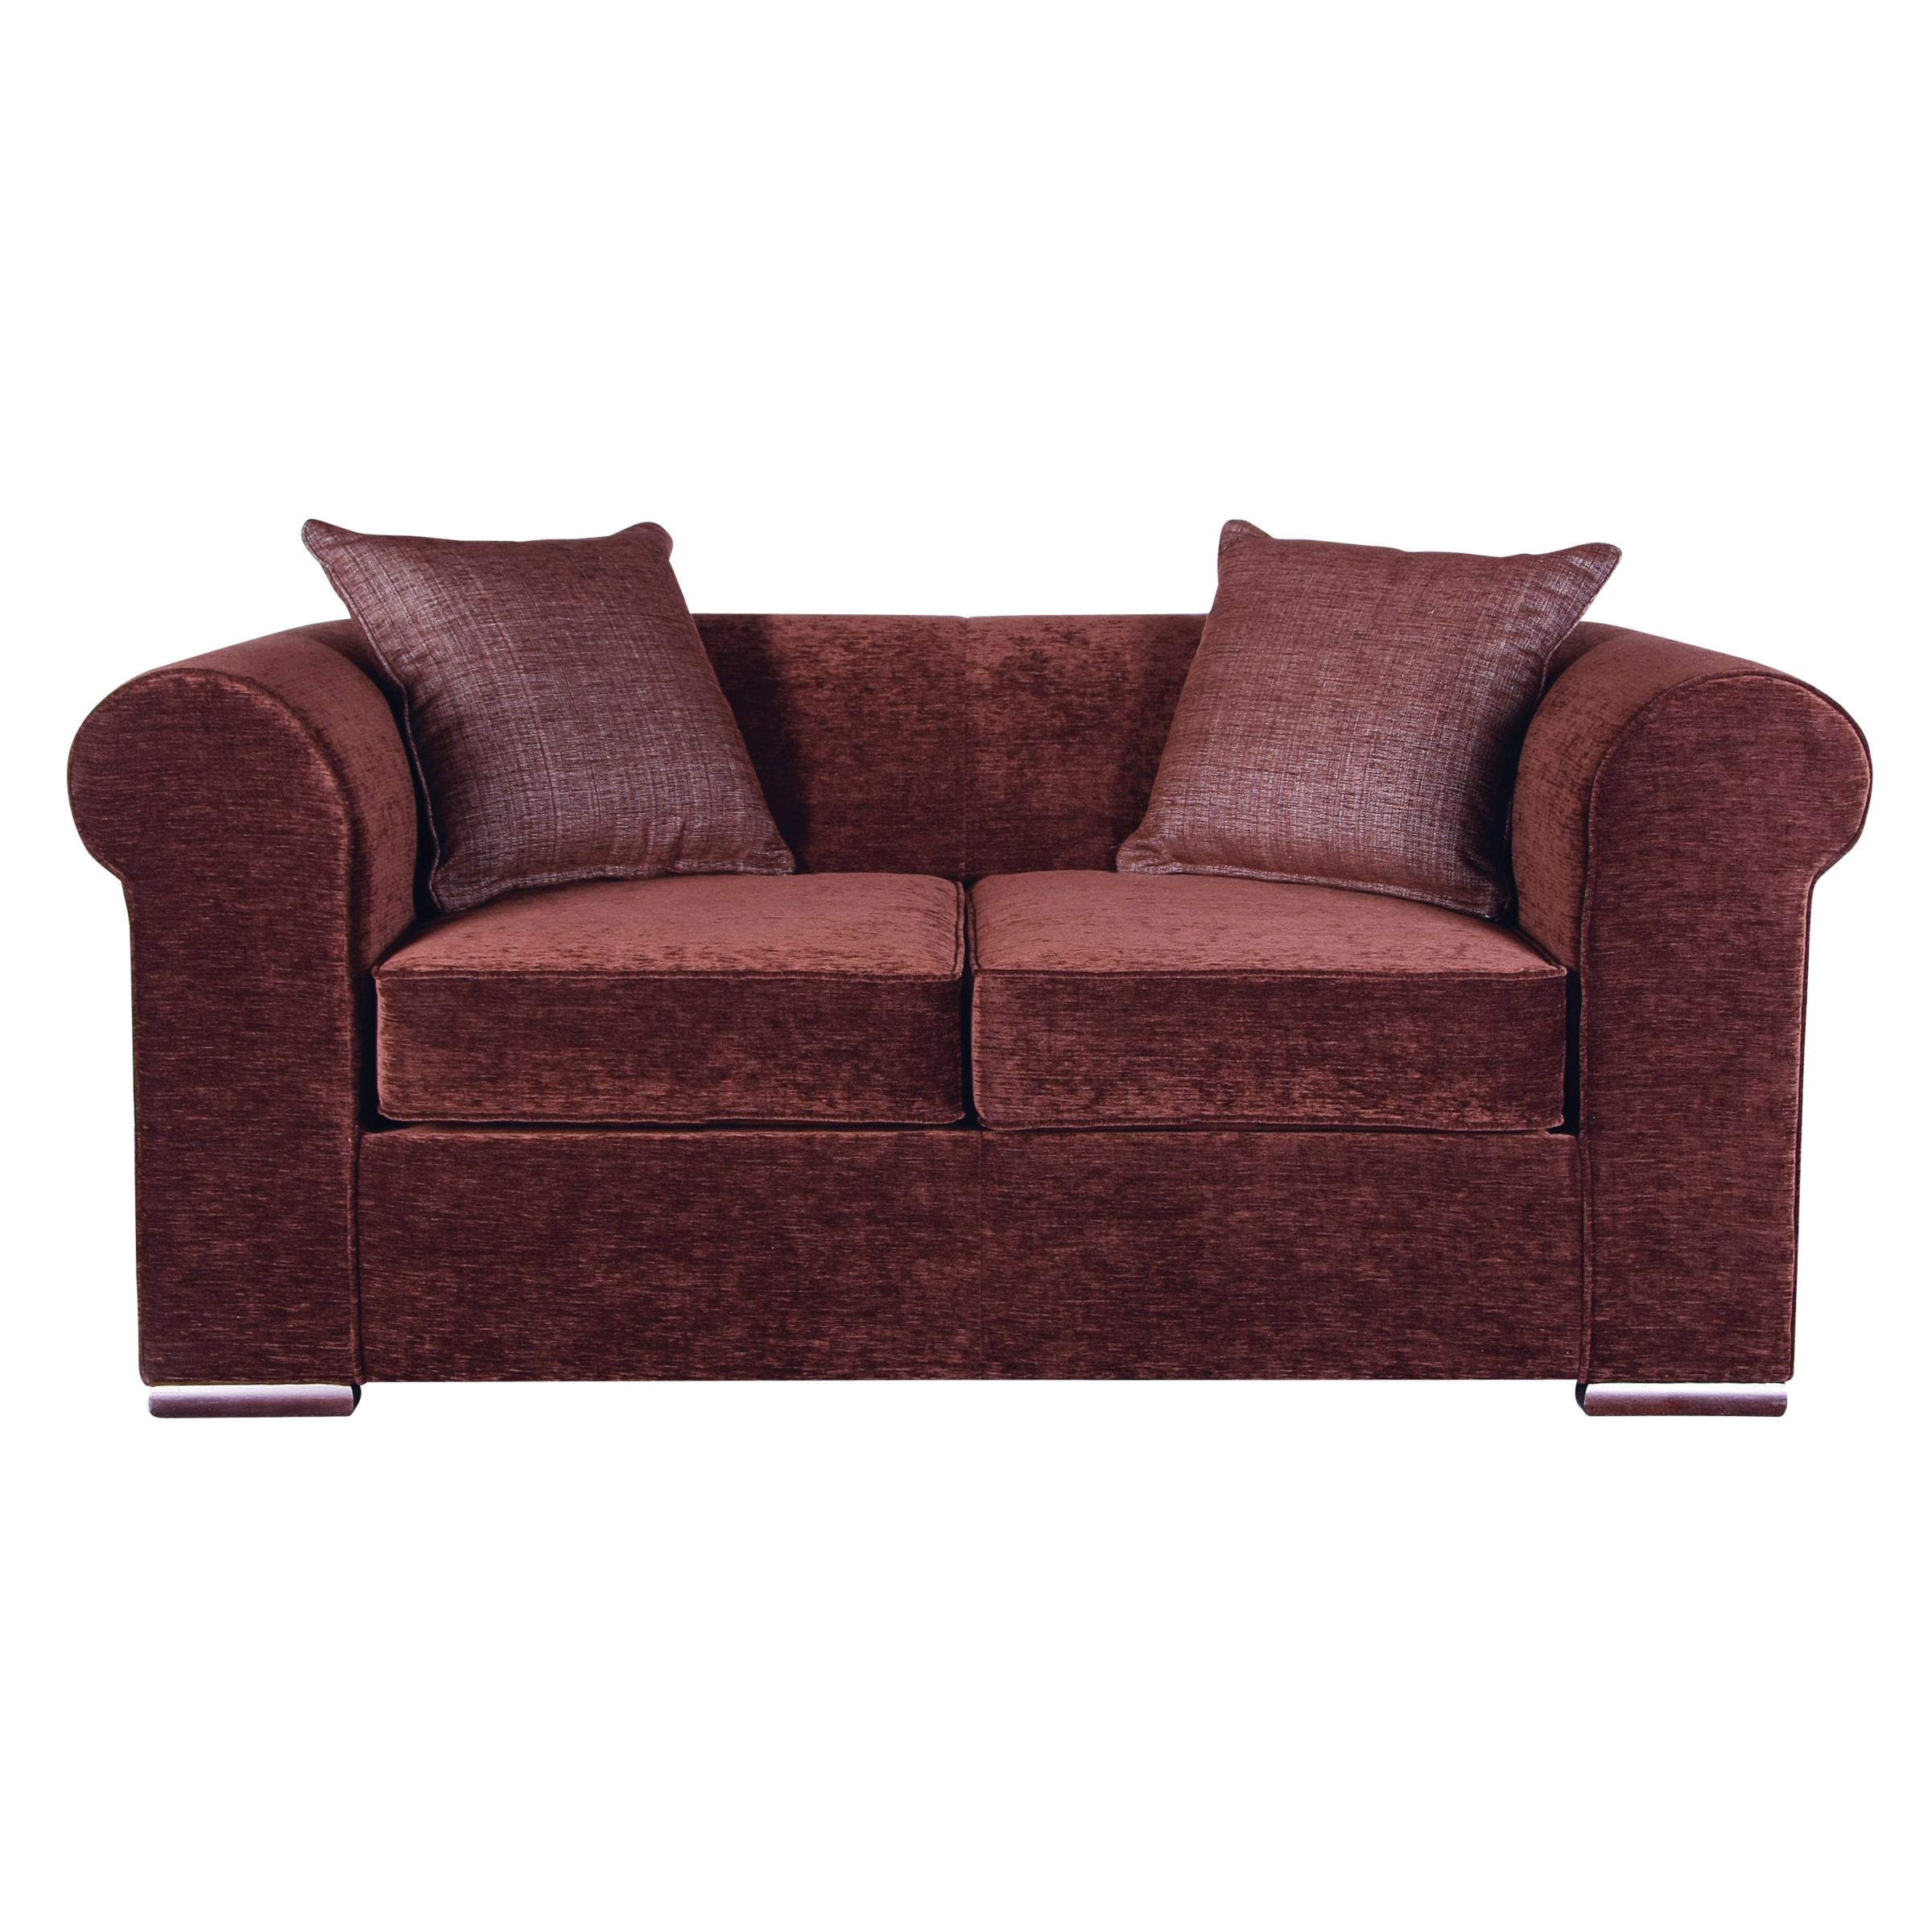 John Lewis Chilton Medium Sofa Bed with Pocket